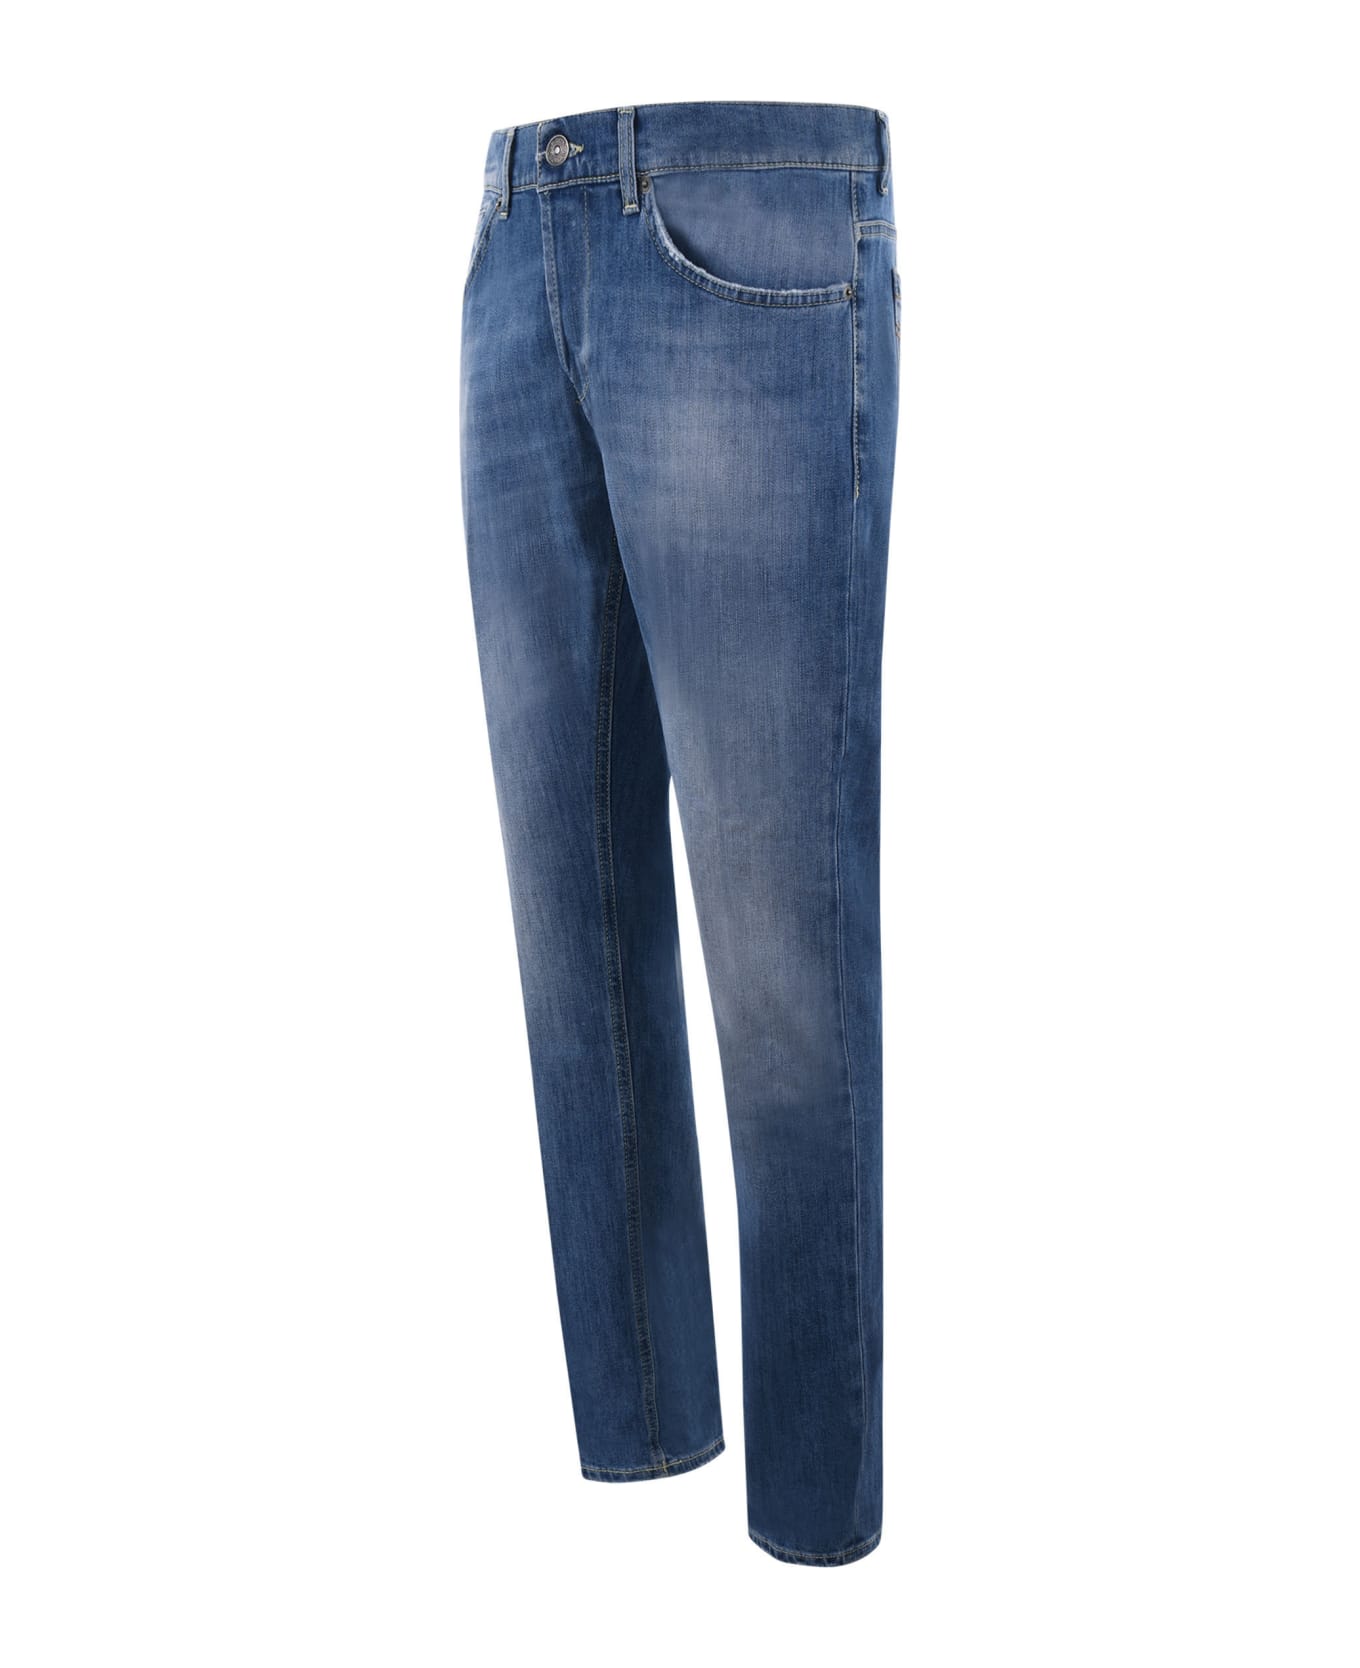 Dondup 'george' Jeans - LIGHT BLUE